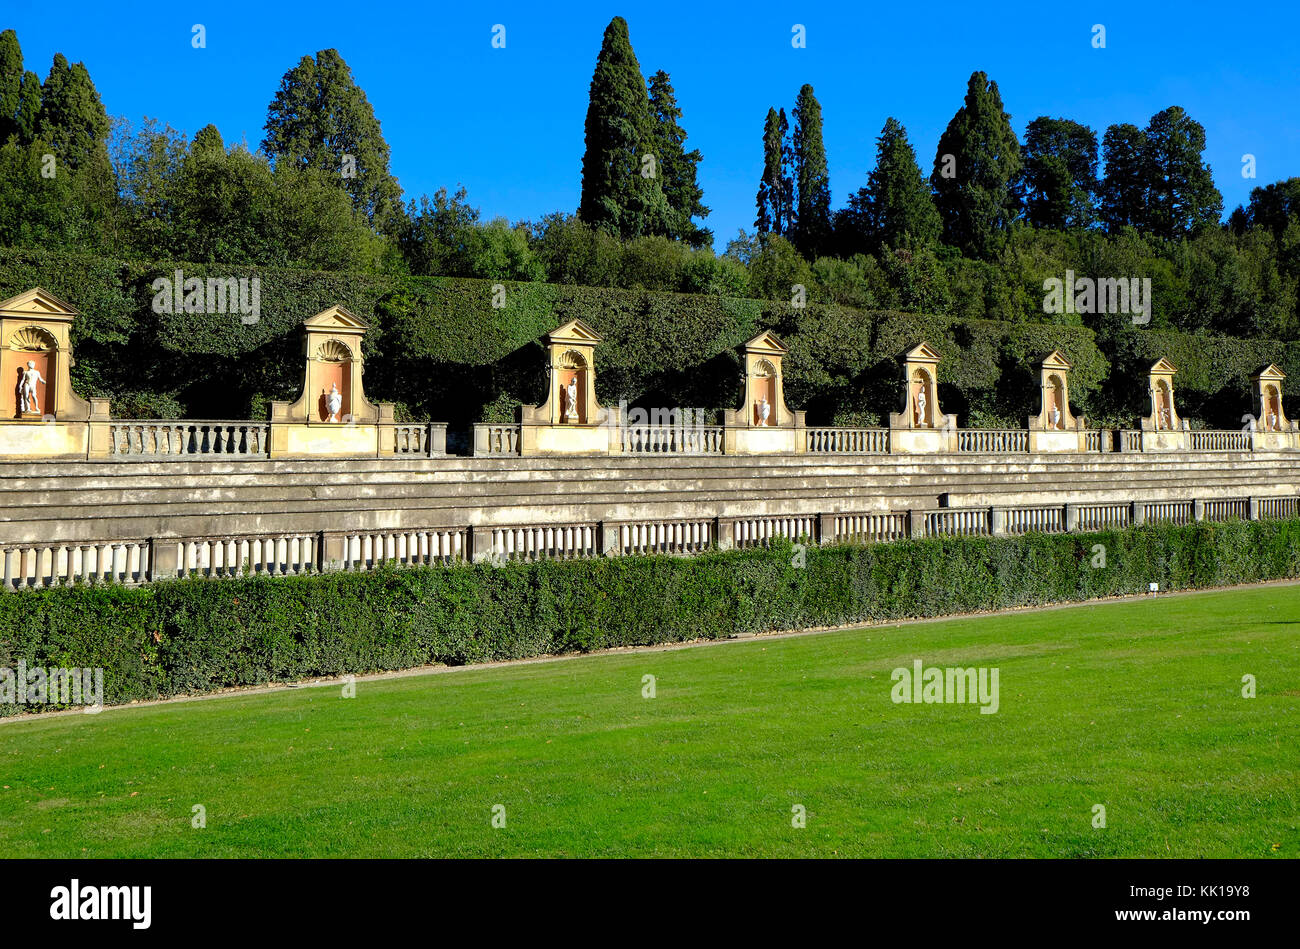 statues in the boboli gardens, palazzo pitti palace, florence, italy Stock Photo